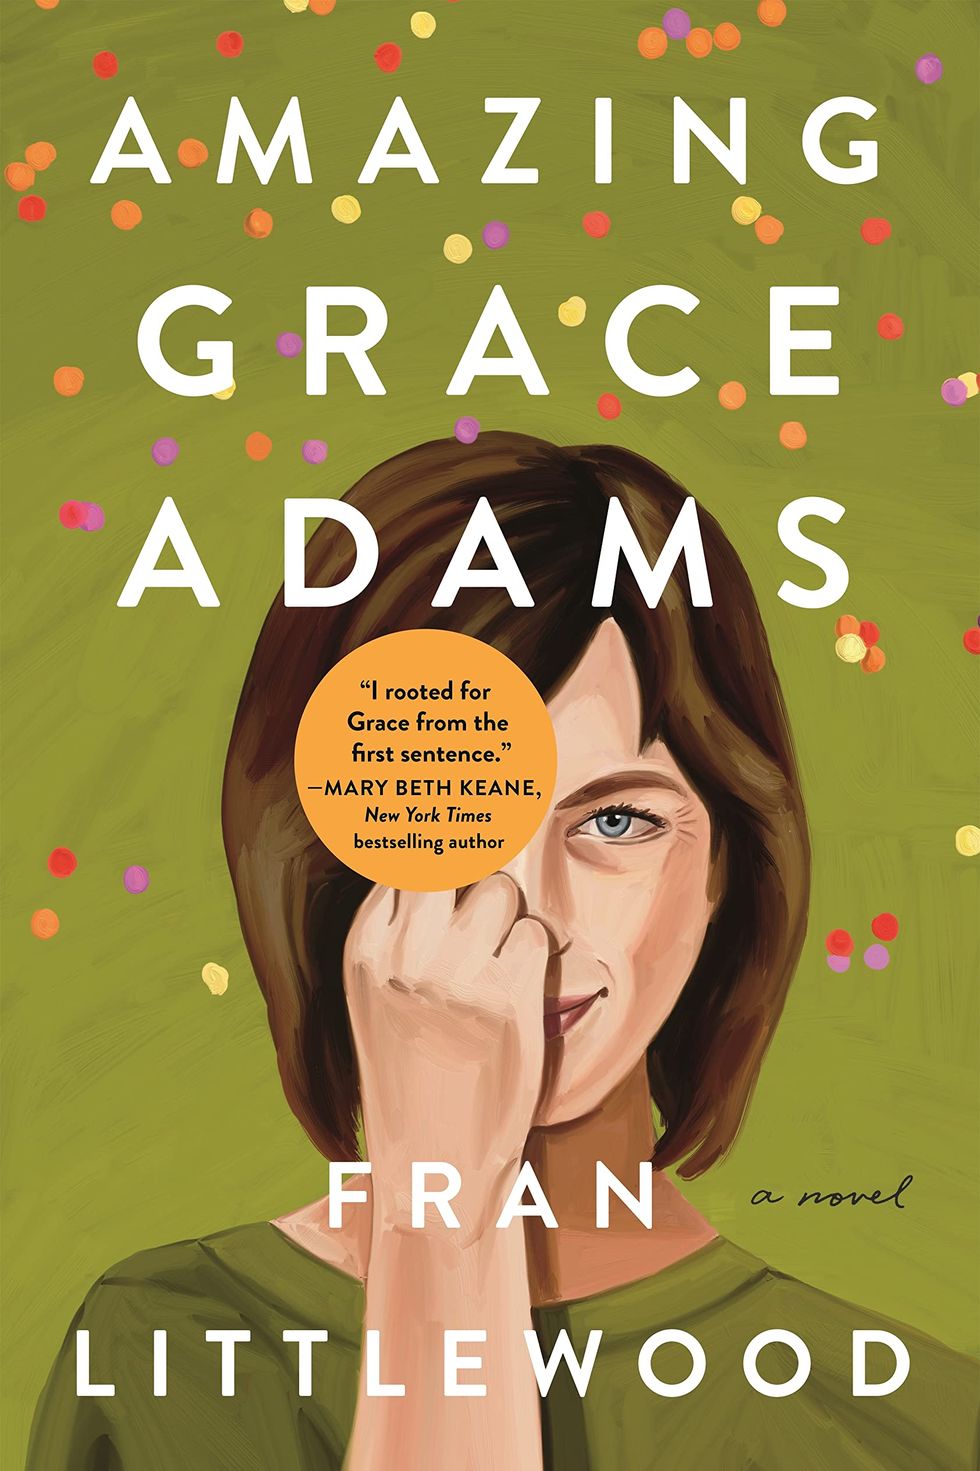 'Amazing Grace Adams'